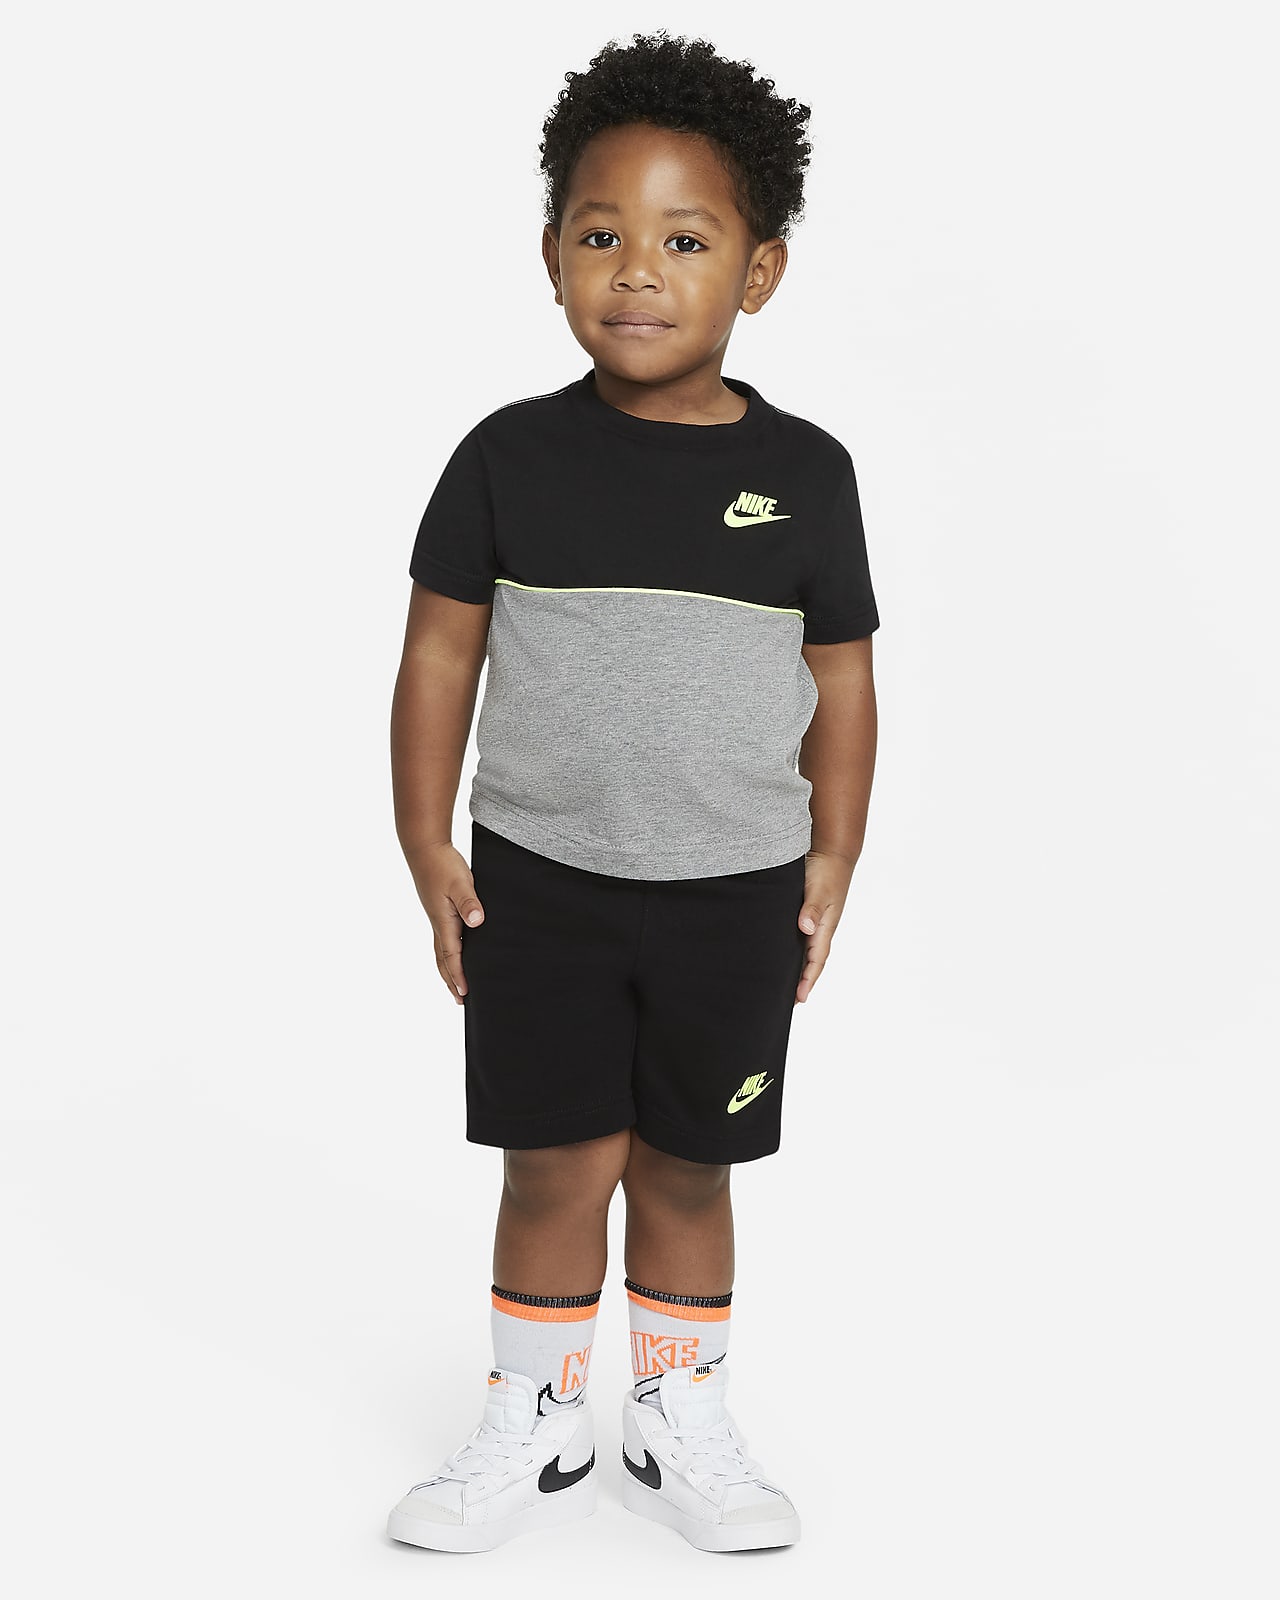 Nike Toddler T-Shirt and Shorts Set.